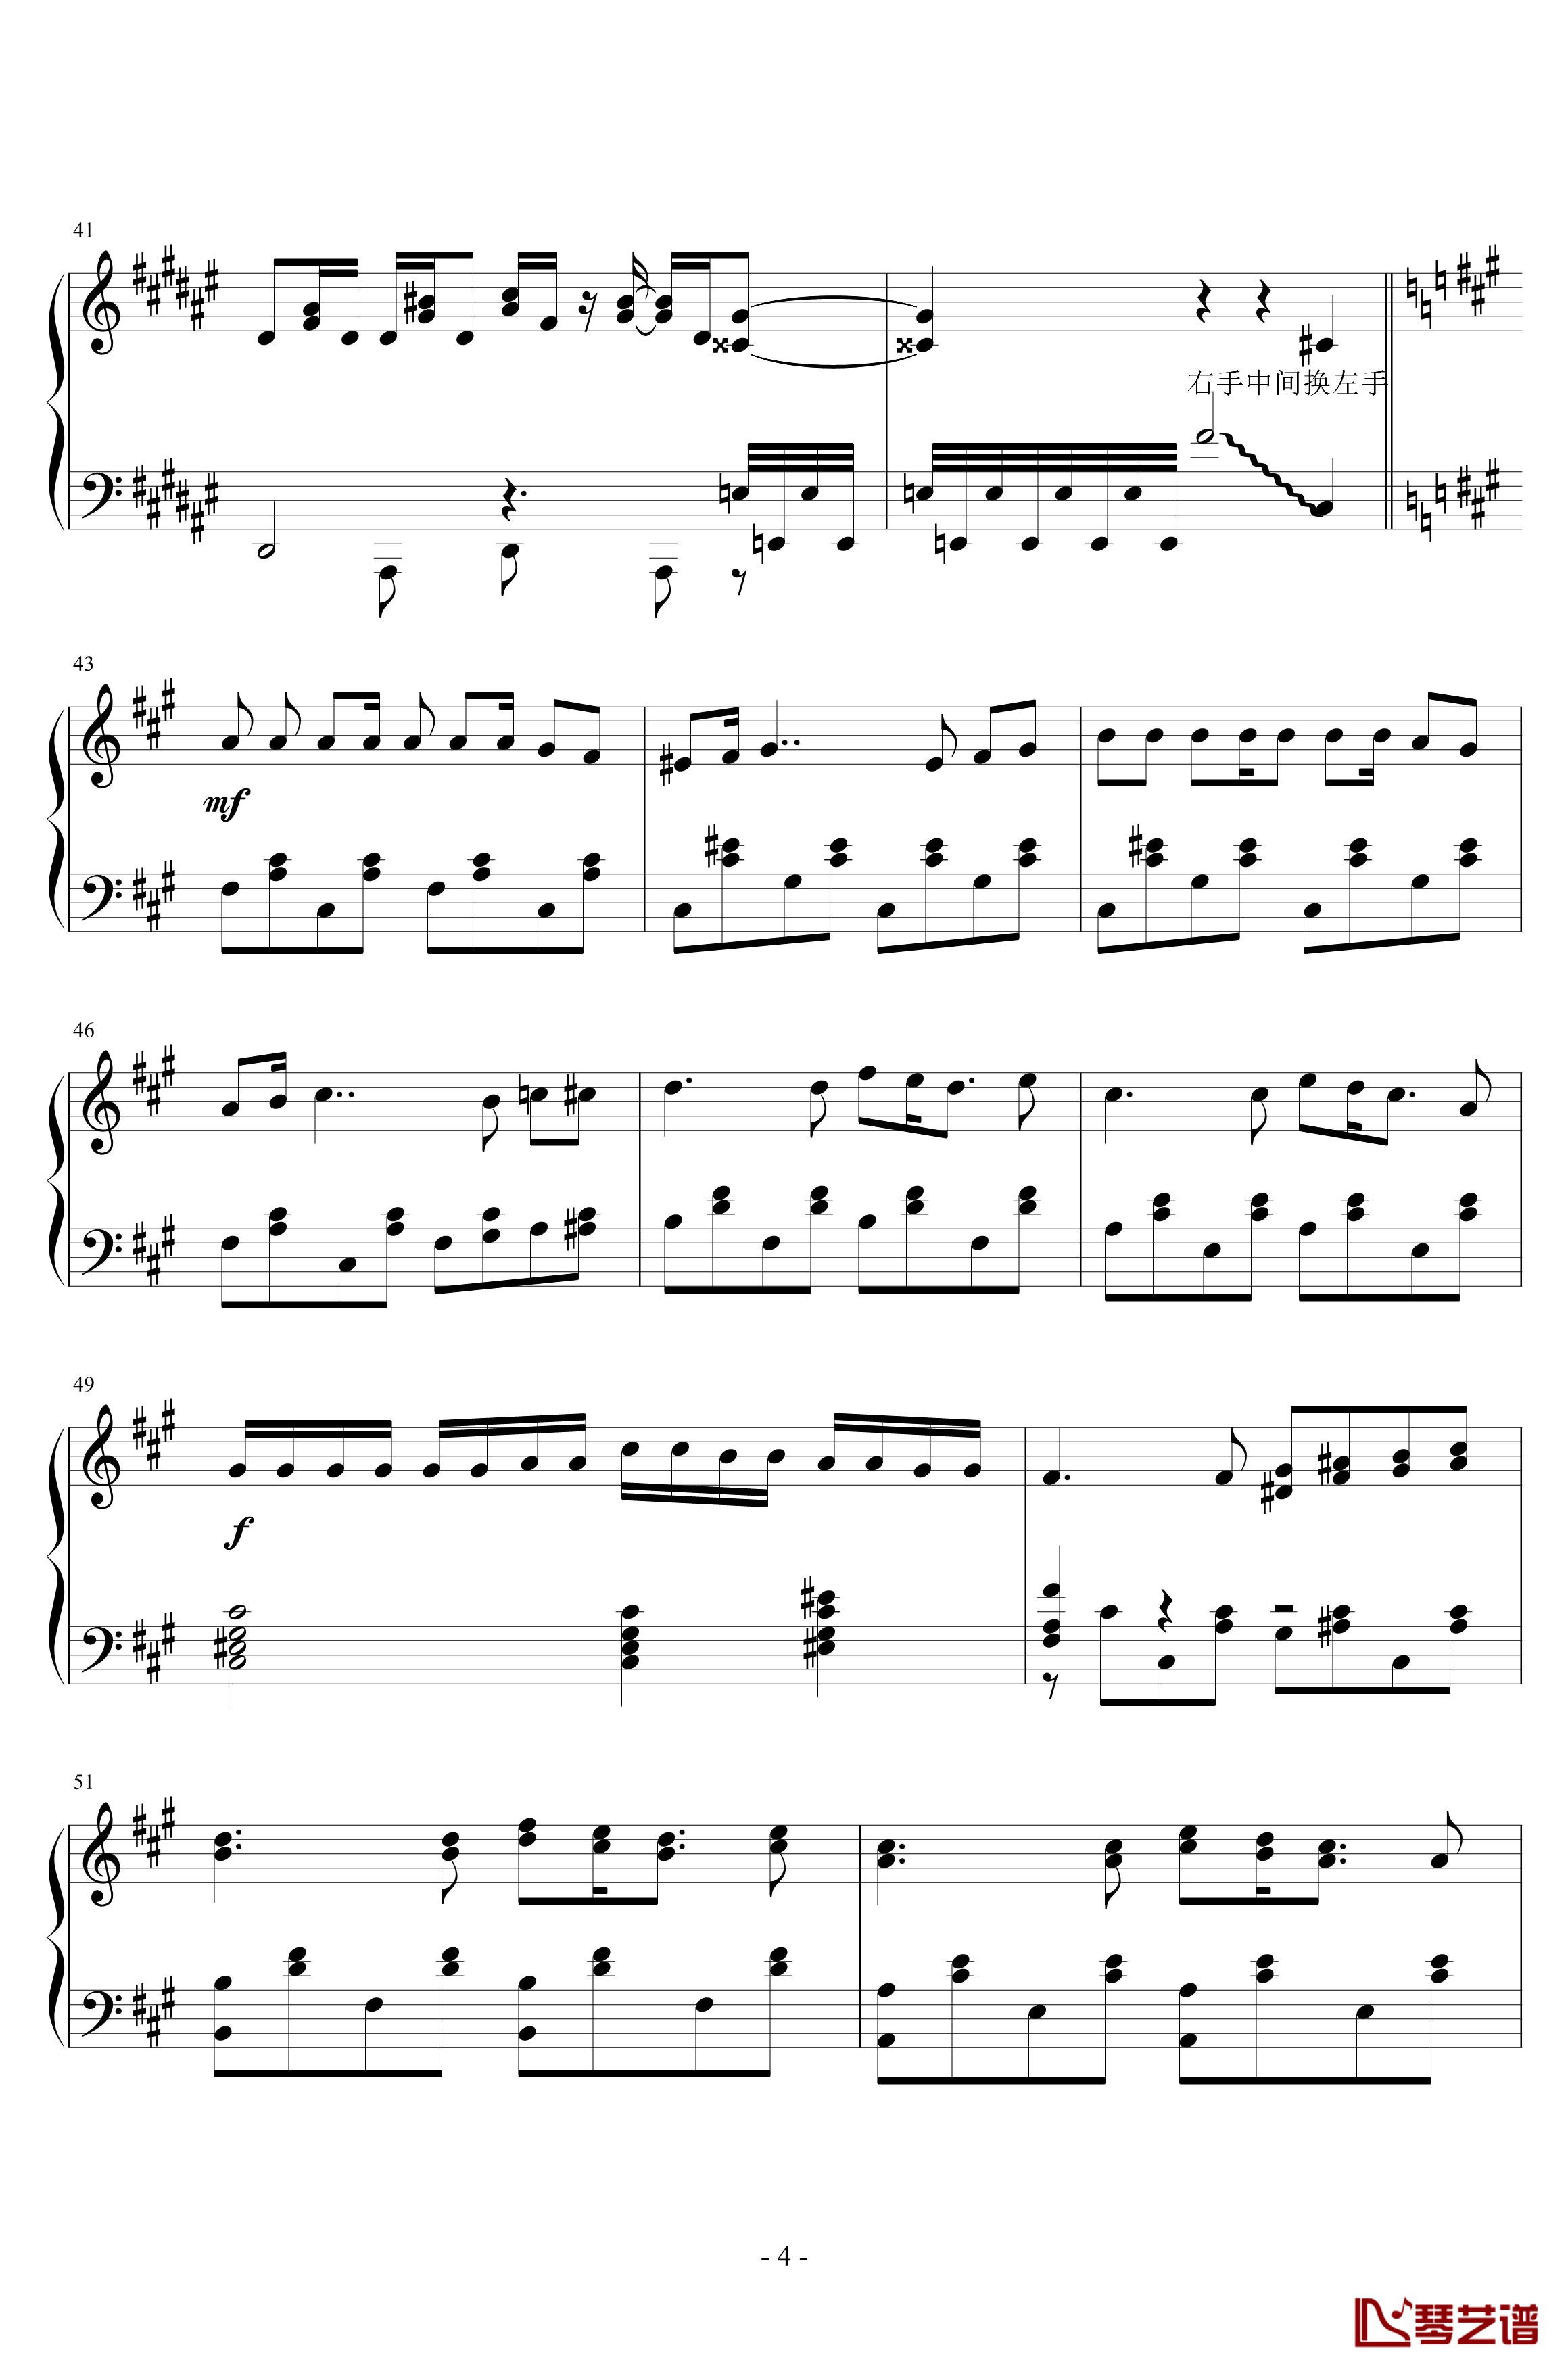 SNOBBISM钢琴谱 -Neru4